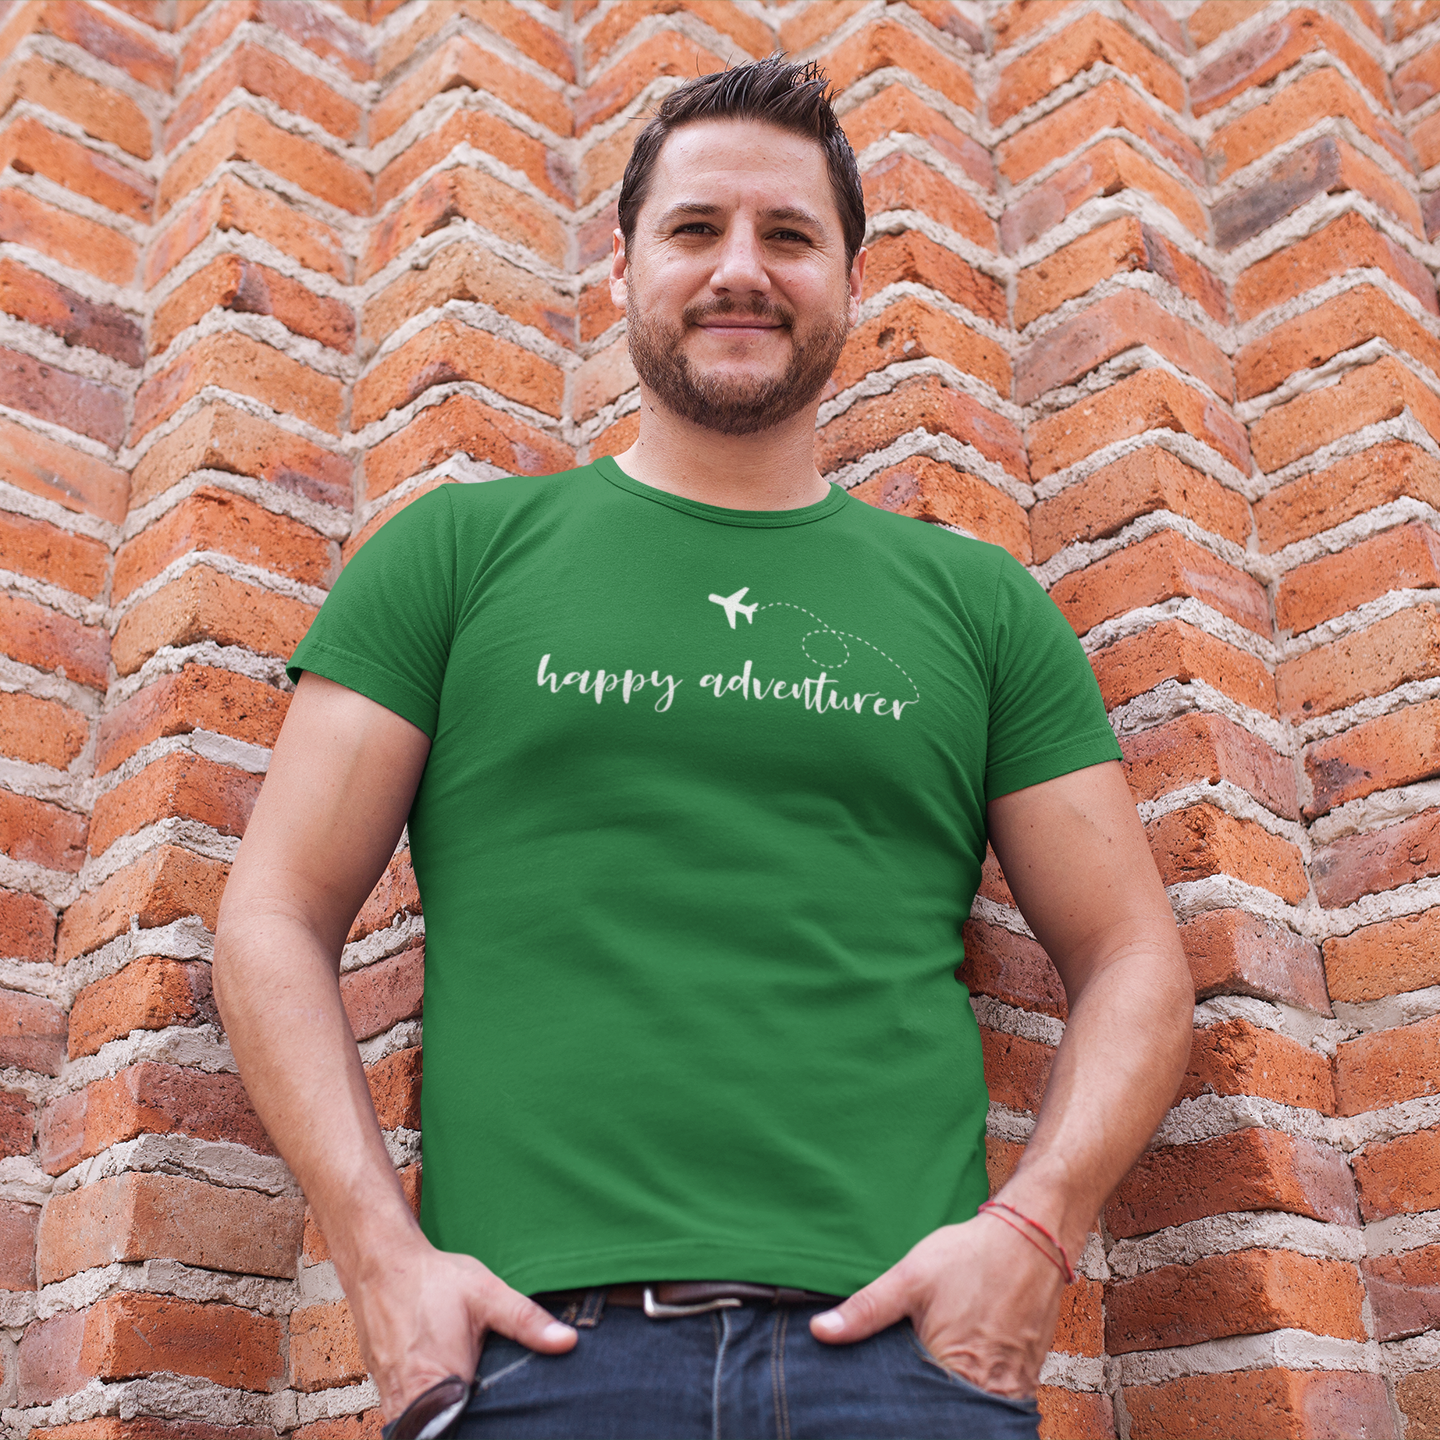 'Happy adventurer' adult shirt